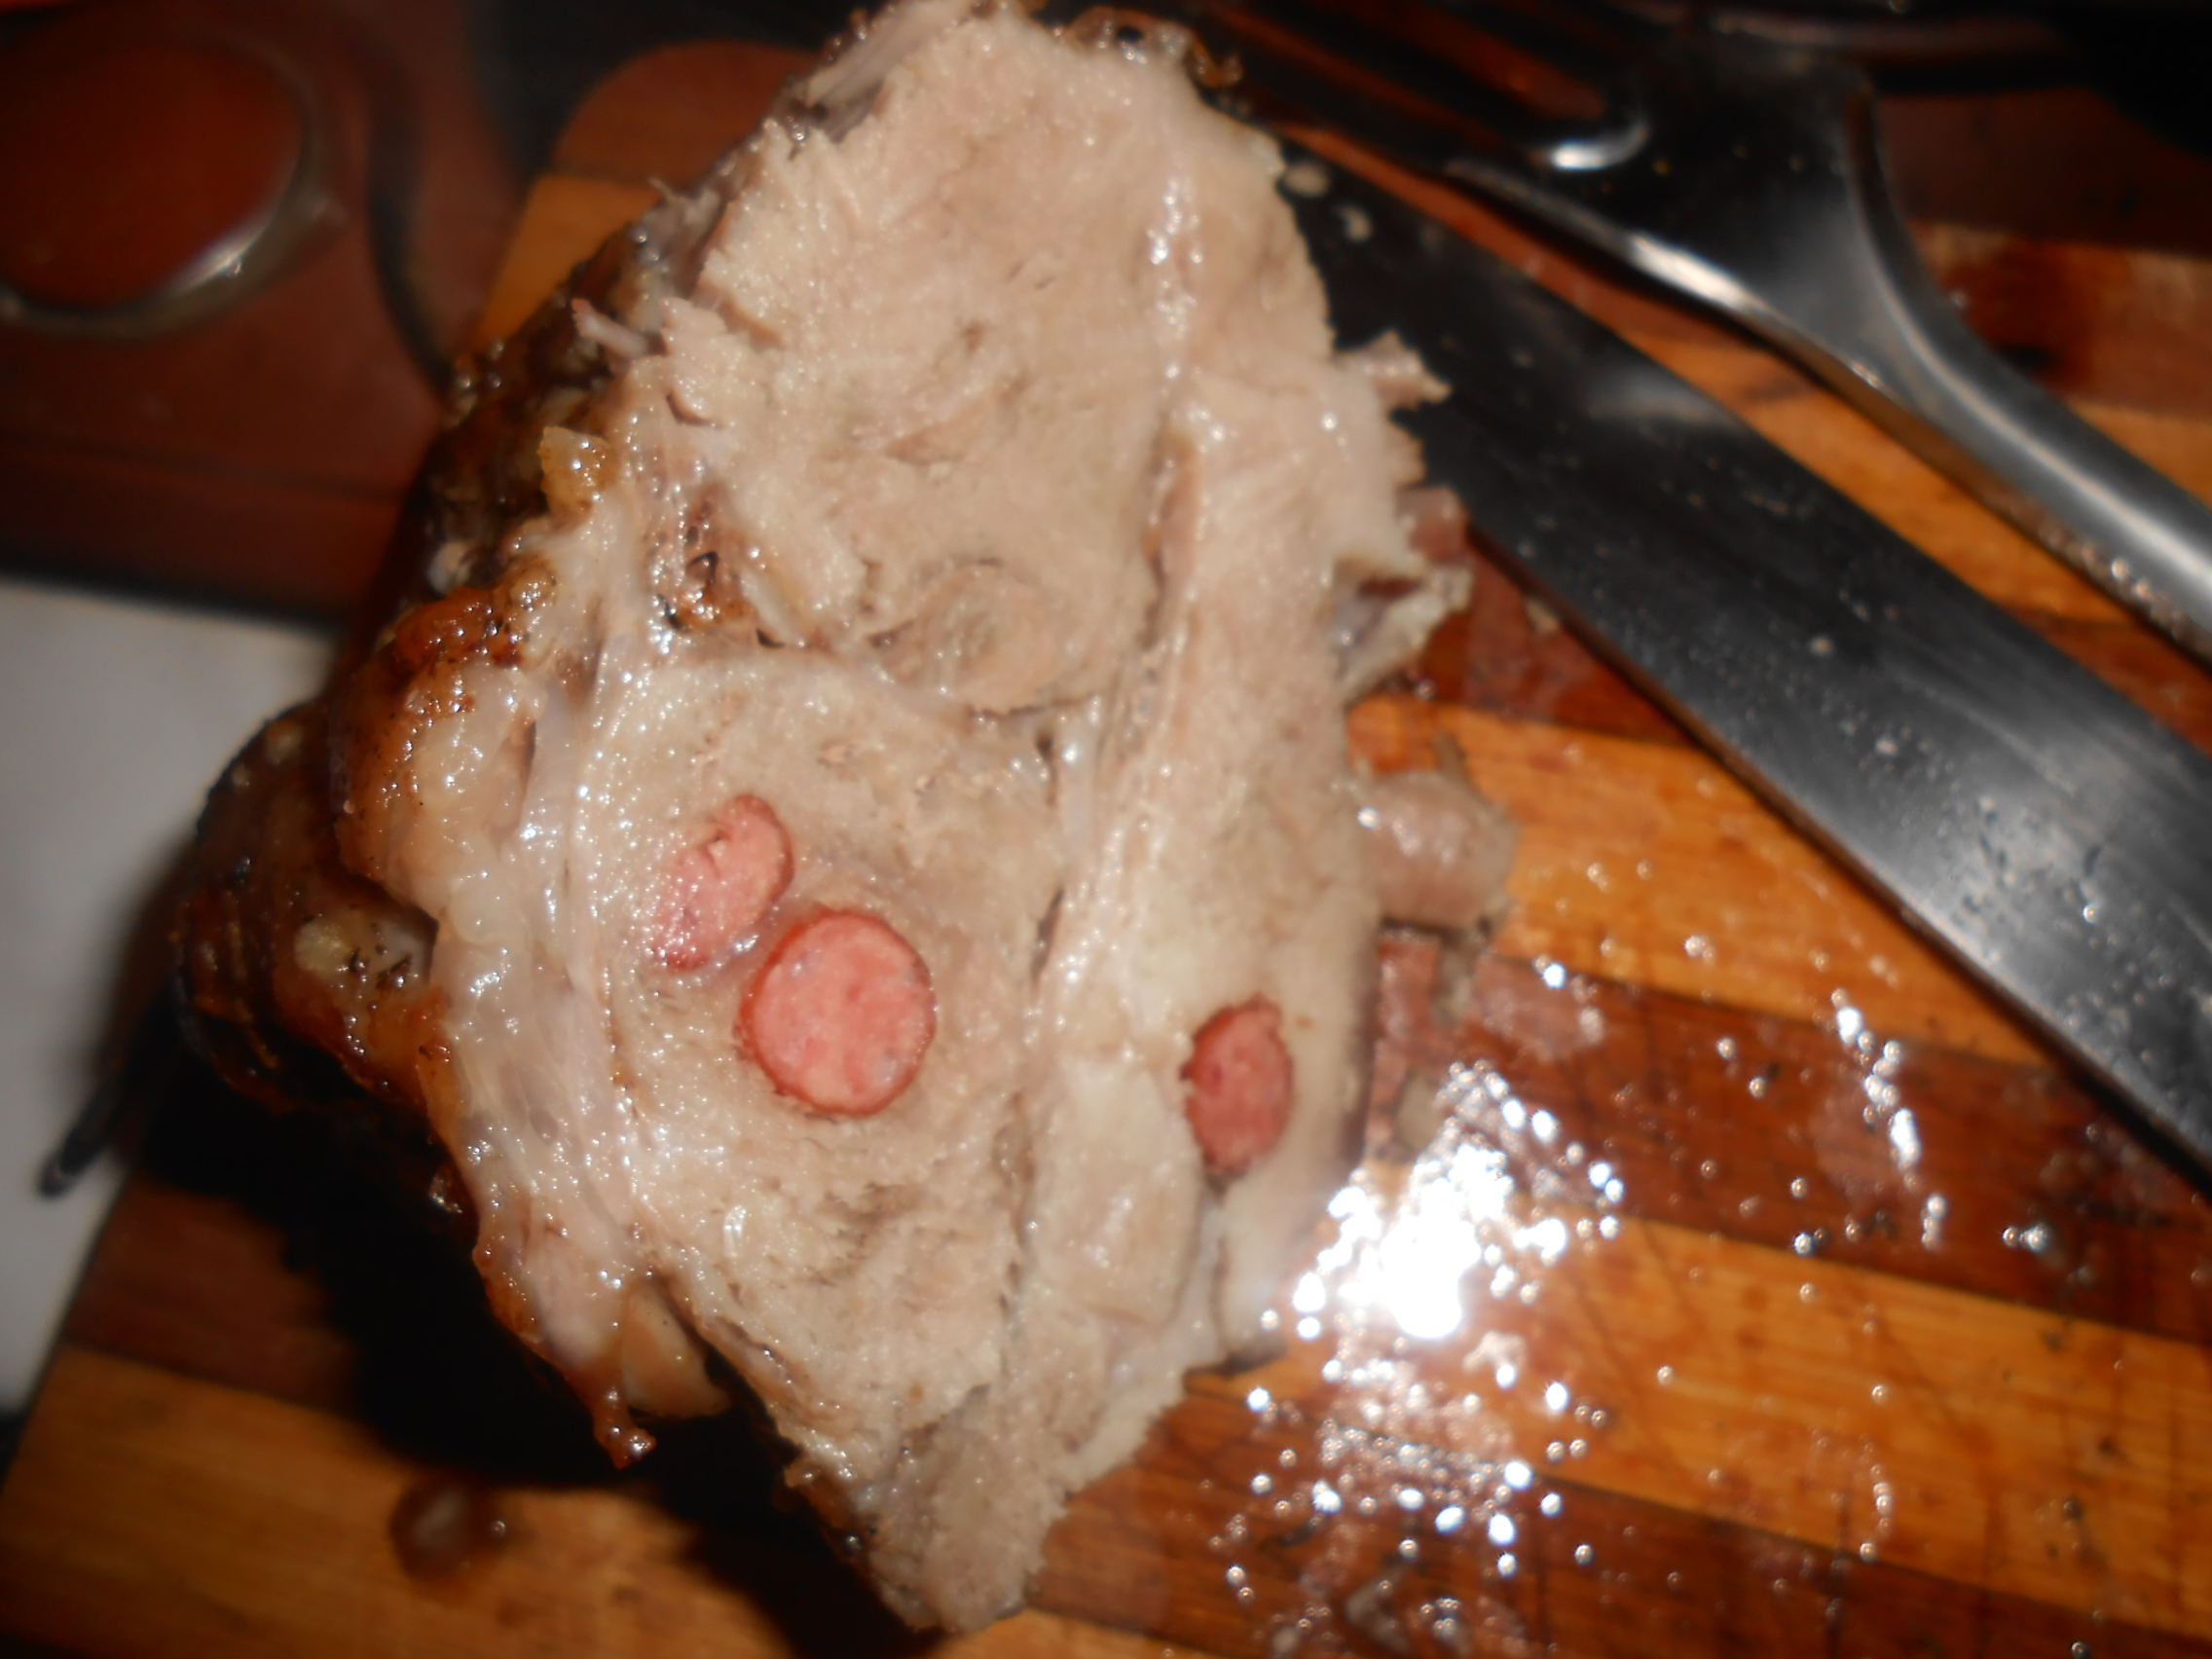 Ceafa de porc impanata coapta-n oala de lut